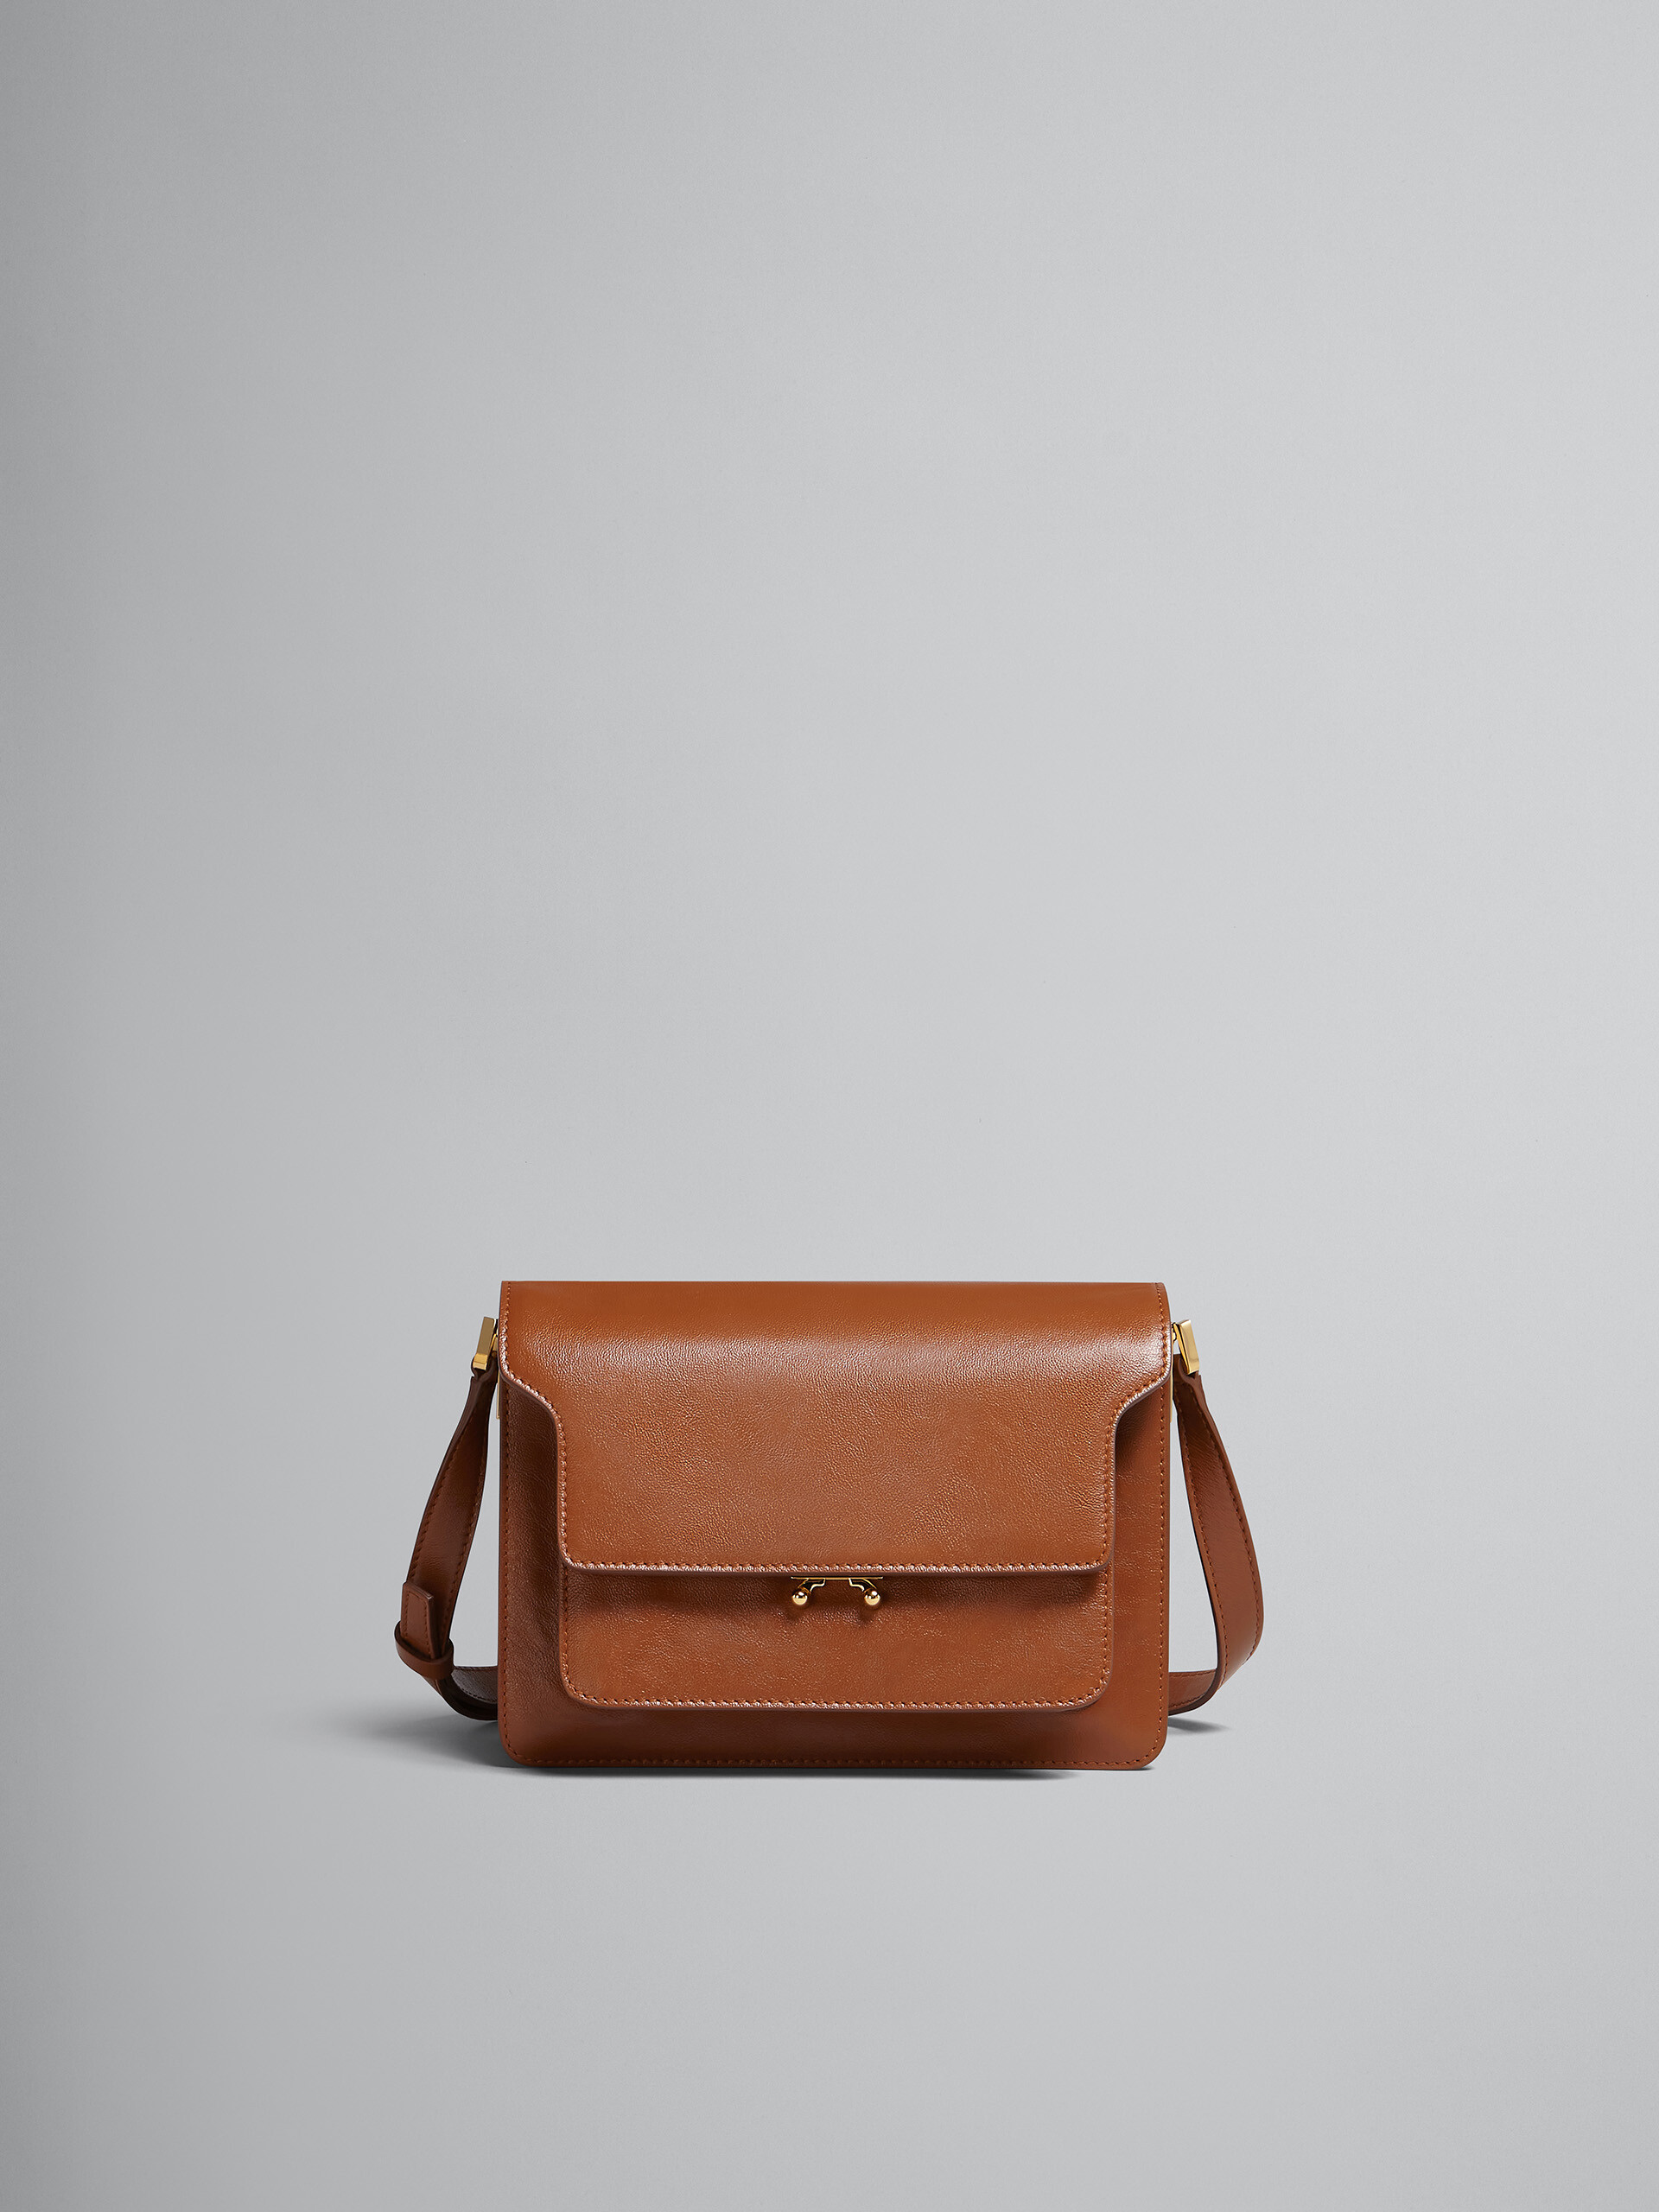 TRUNK medium bag in dark red shiny leather